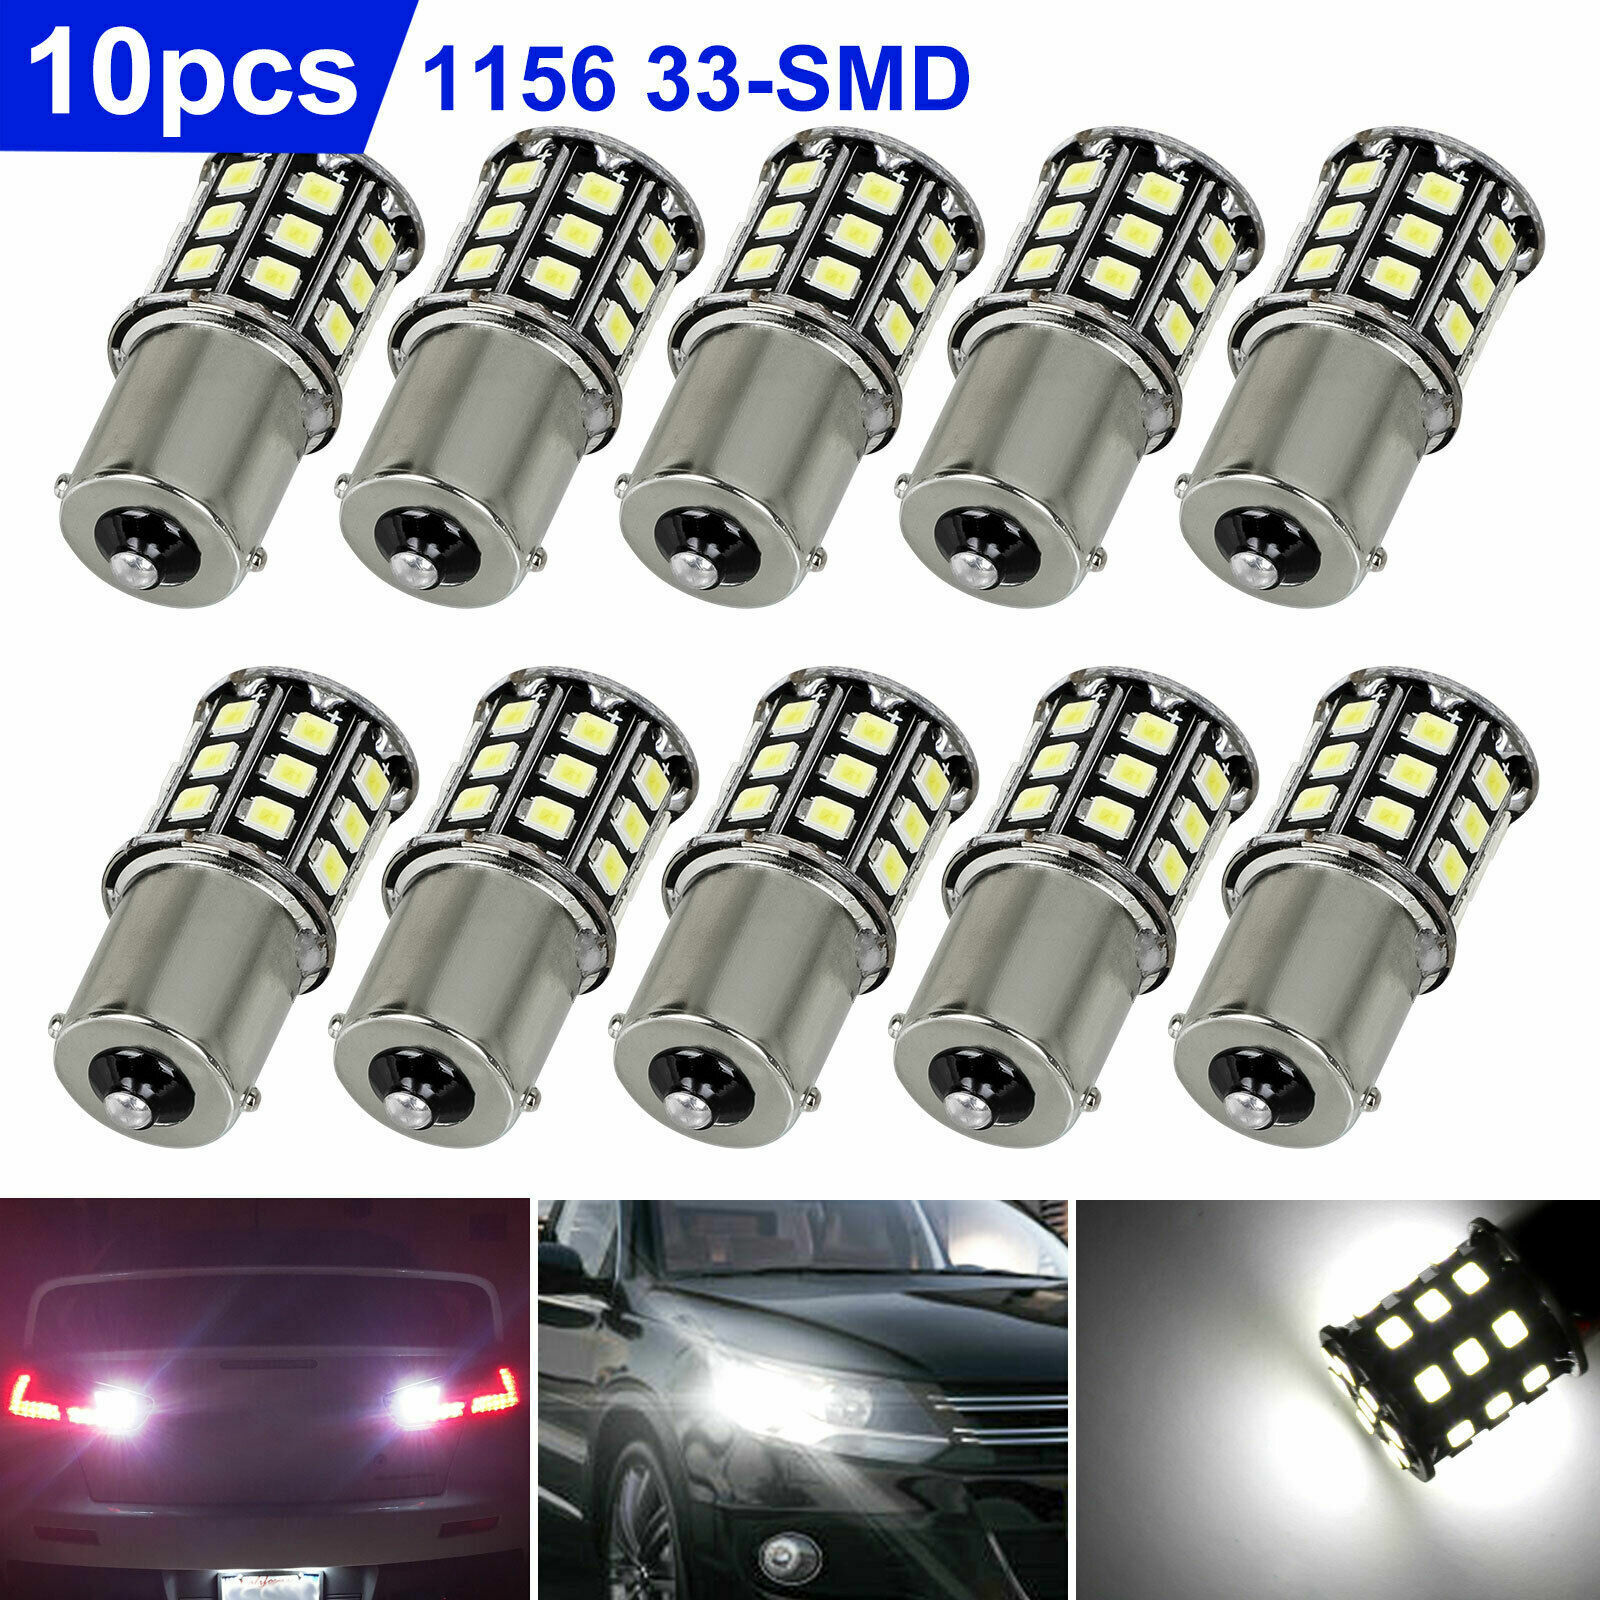 10pcs Super Bright White 1156 RV Trailer 33-SMD LED 1141 Interior Light Bulbs US Ridroid LUY-47CDA - фотография #2